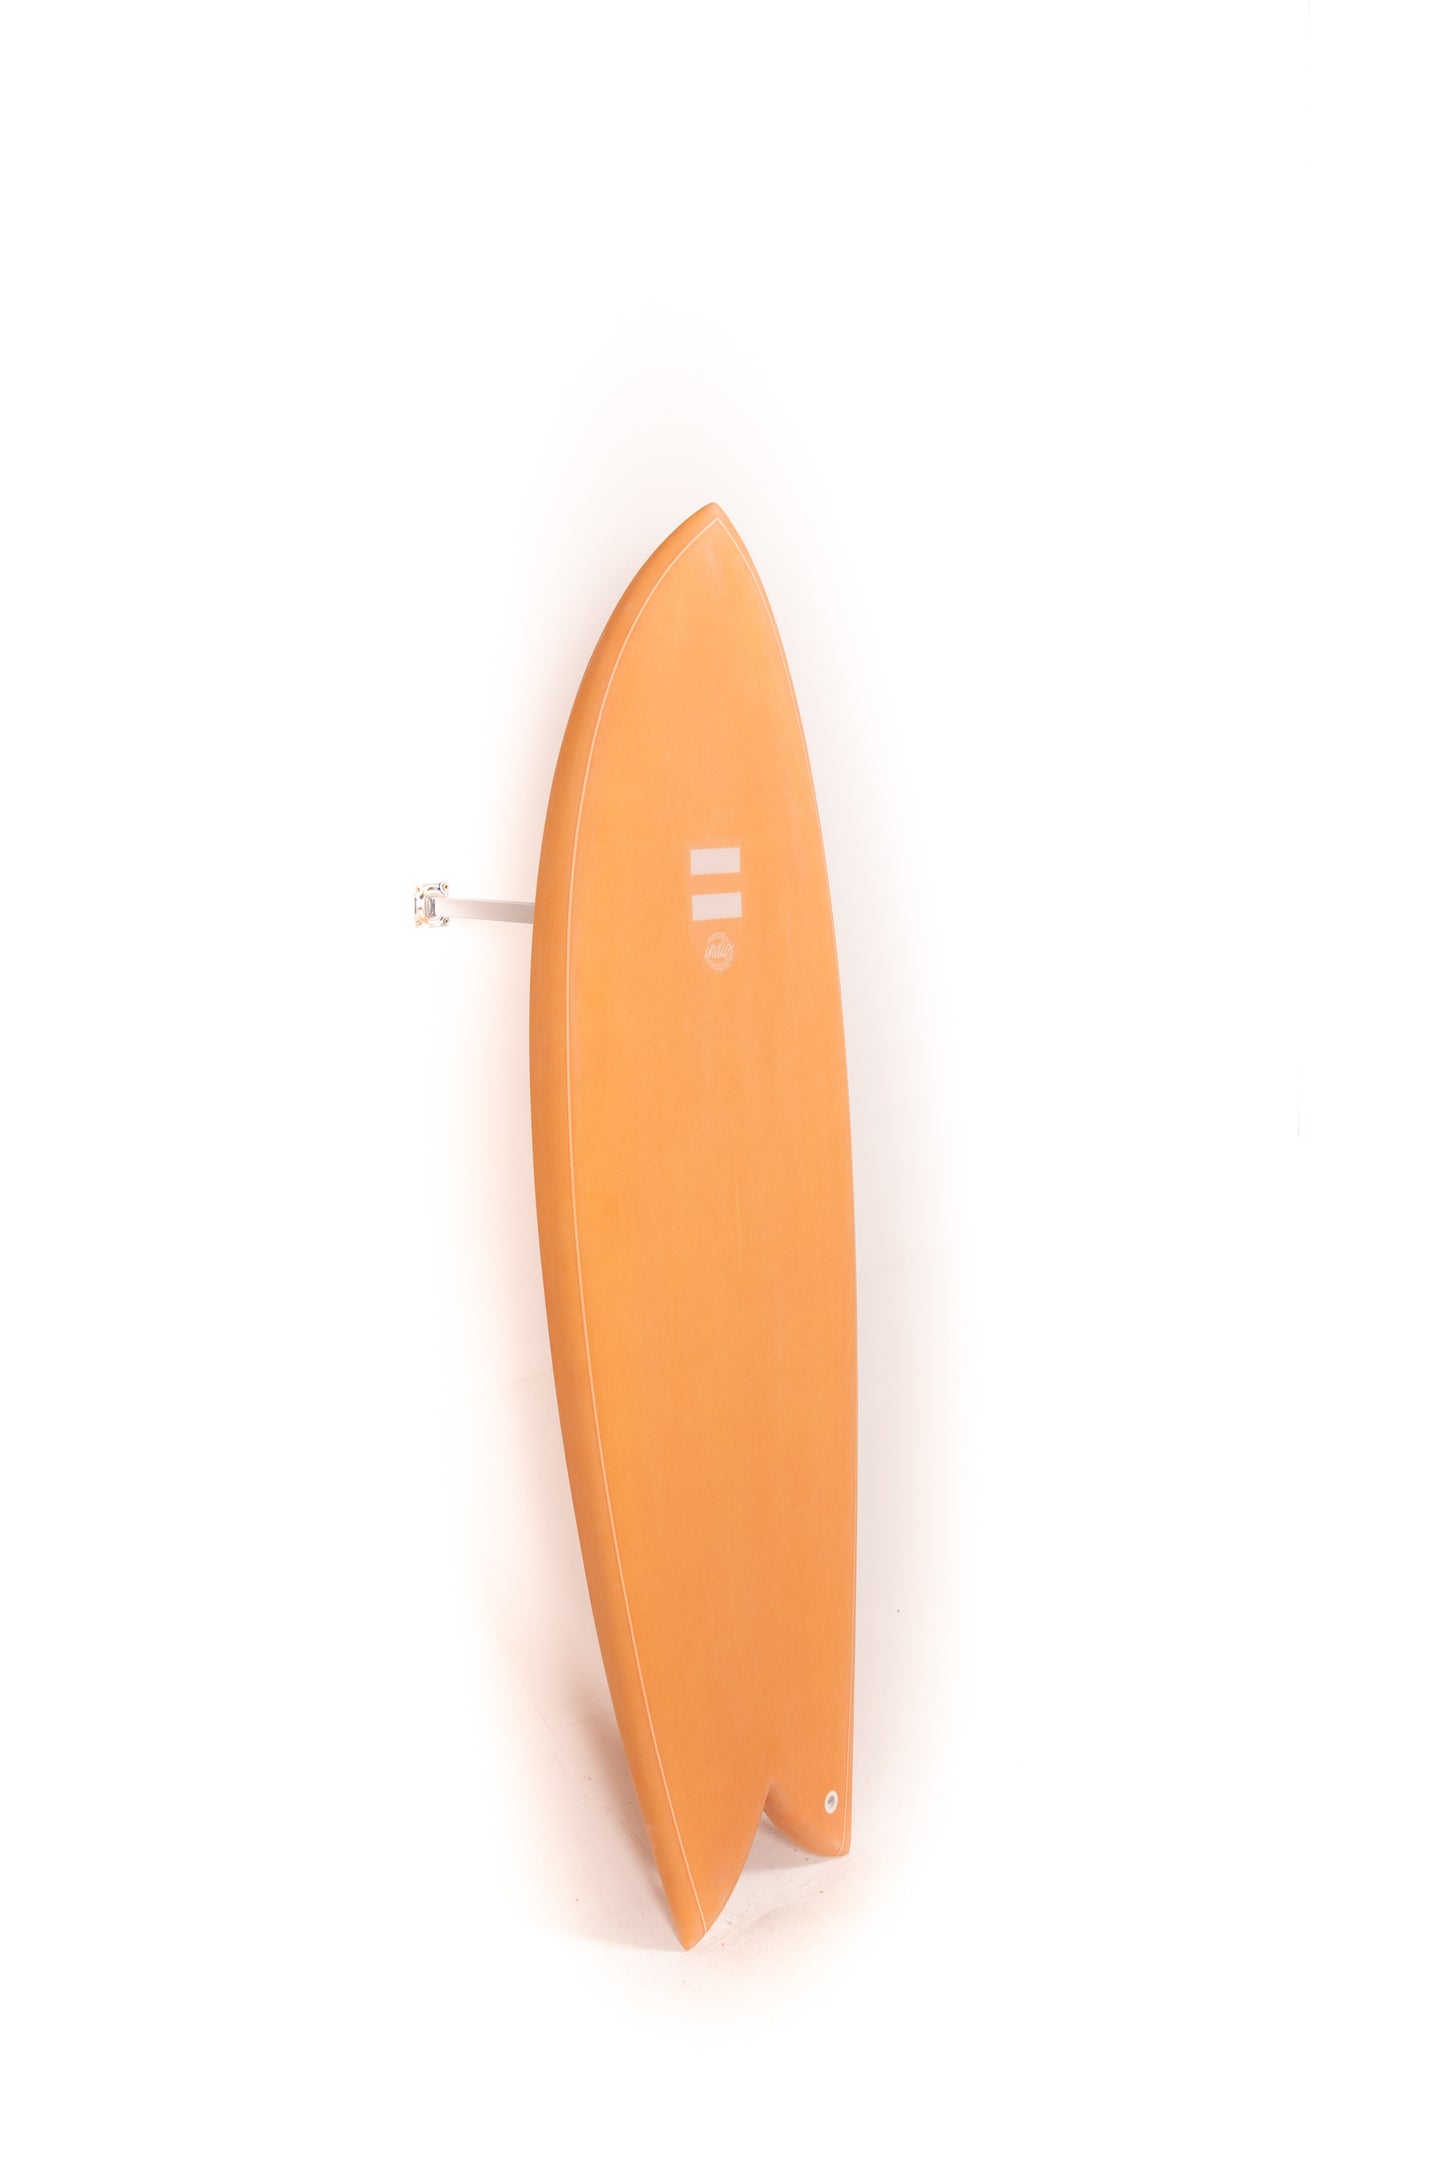 
                  
                    Pukas Surf Shop -  Indio Surfboards - DAB TERRACOTA FCS II - 5’9” x 21 1/8 x 2 9/16 x 37.60L.
                  
                